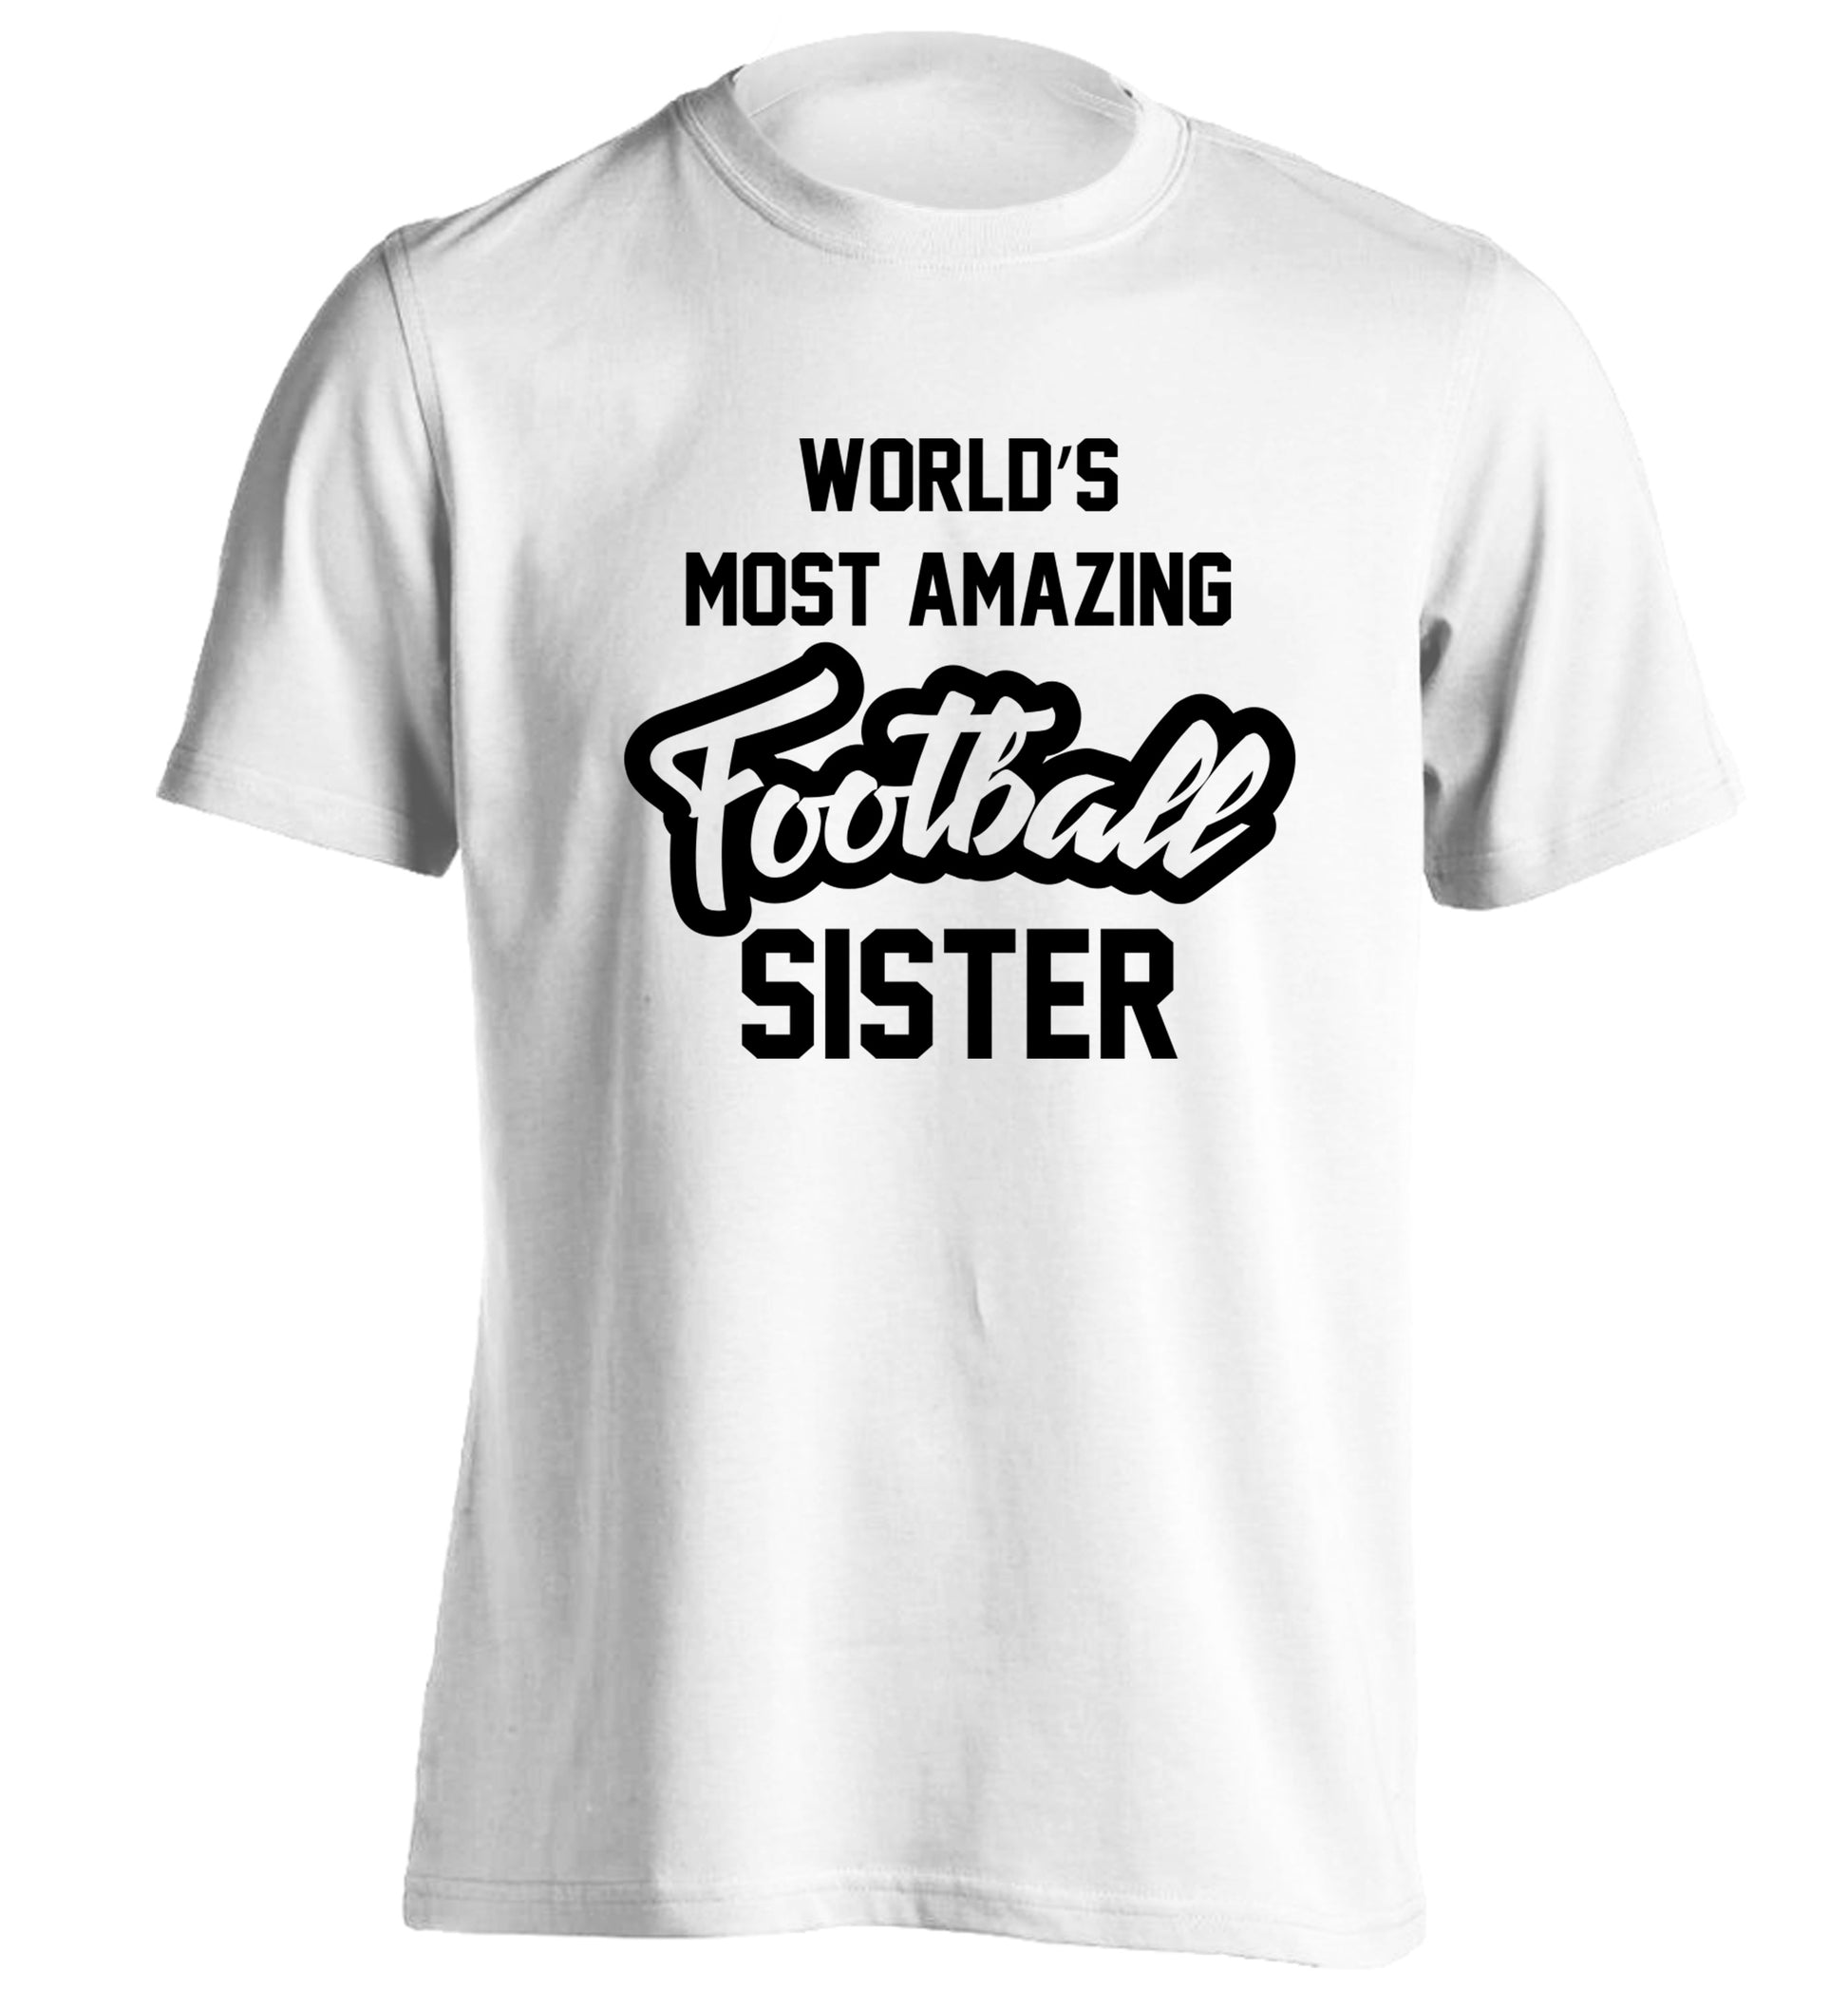 Worlds most amazing football sister adults unisexwhite Tshirt 2XL